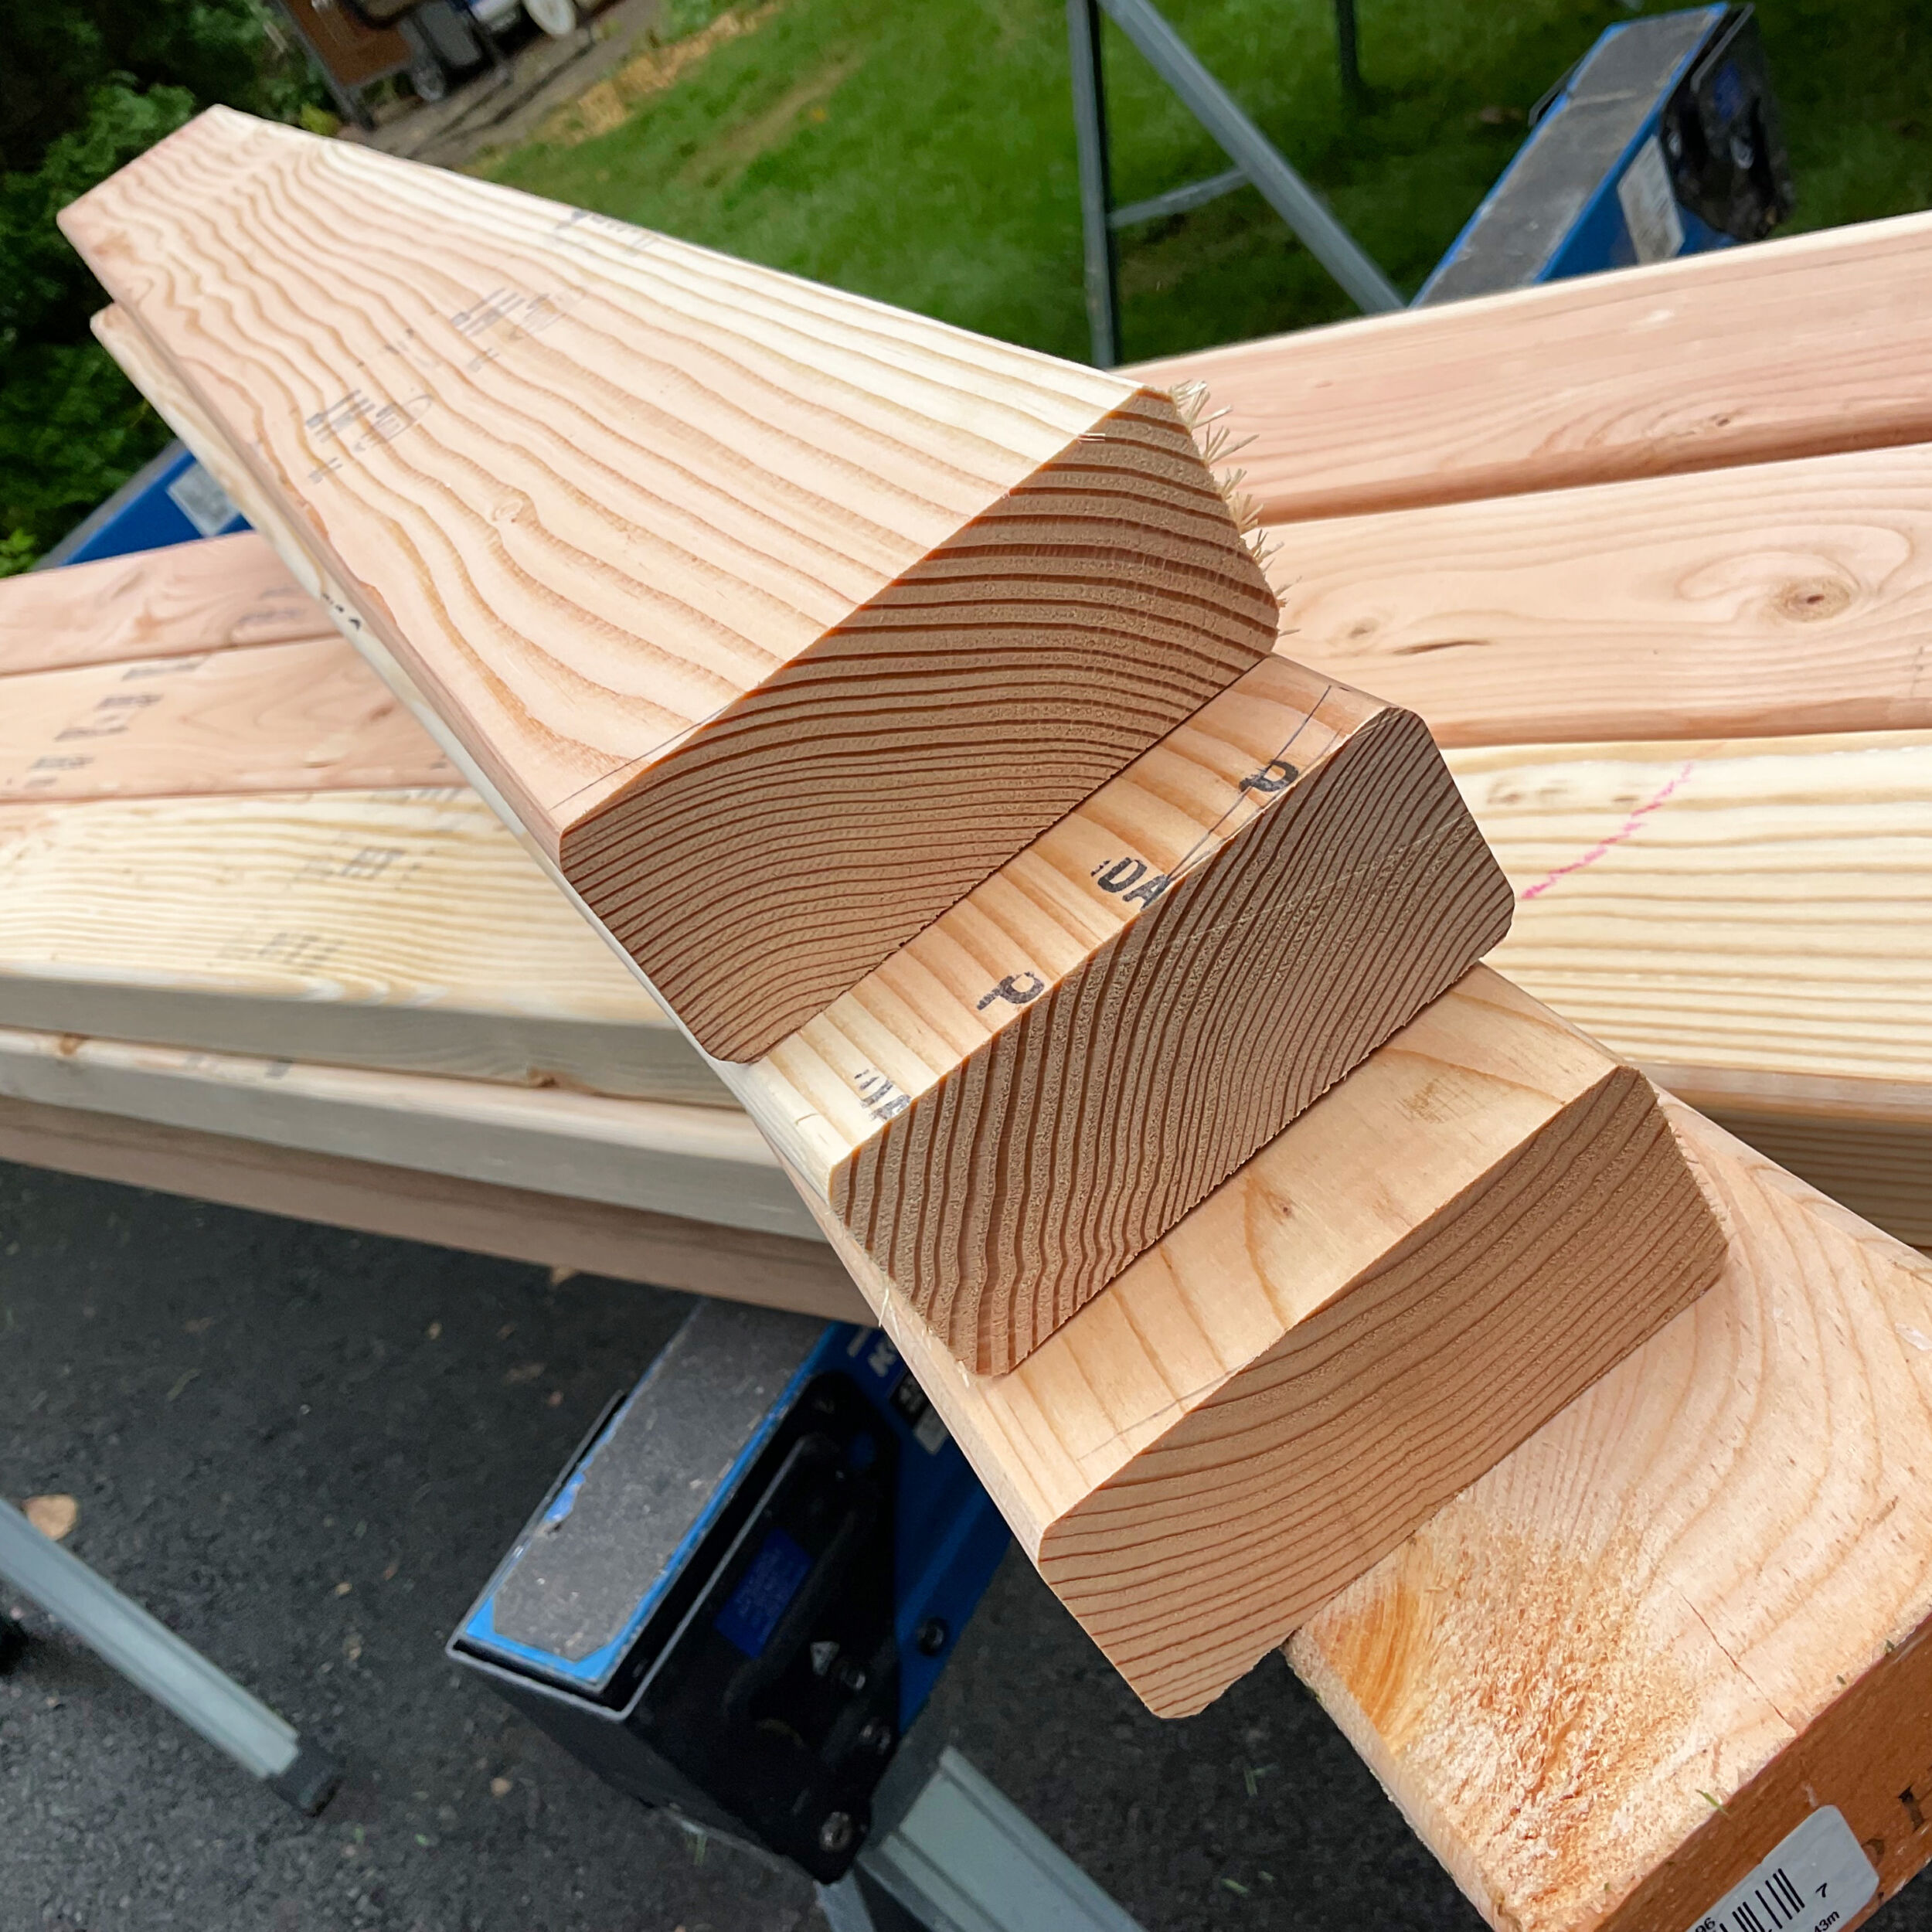 Lumber Lowe's MyFixitUpLife shortage demand building products